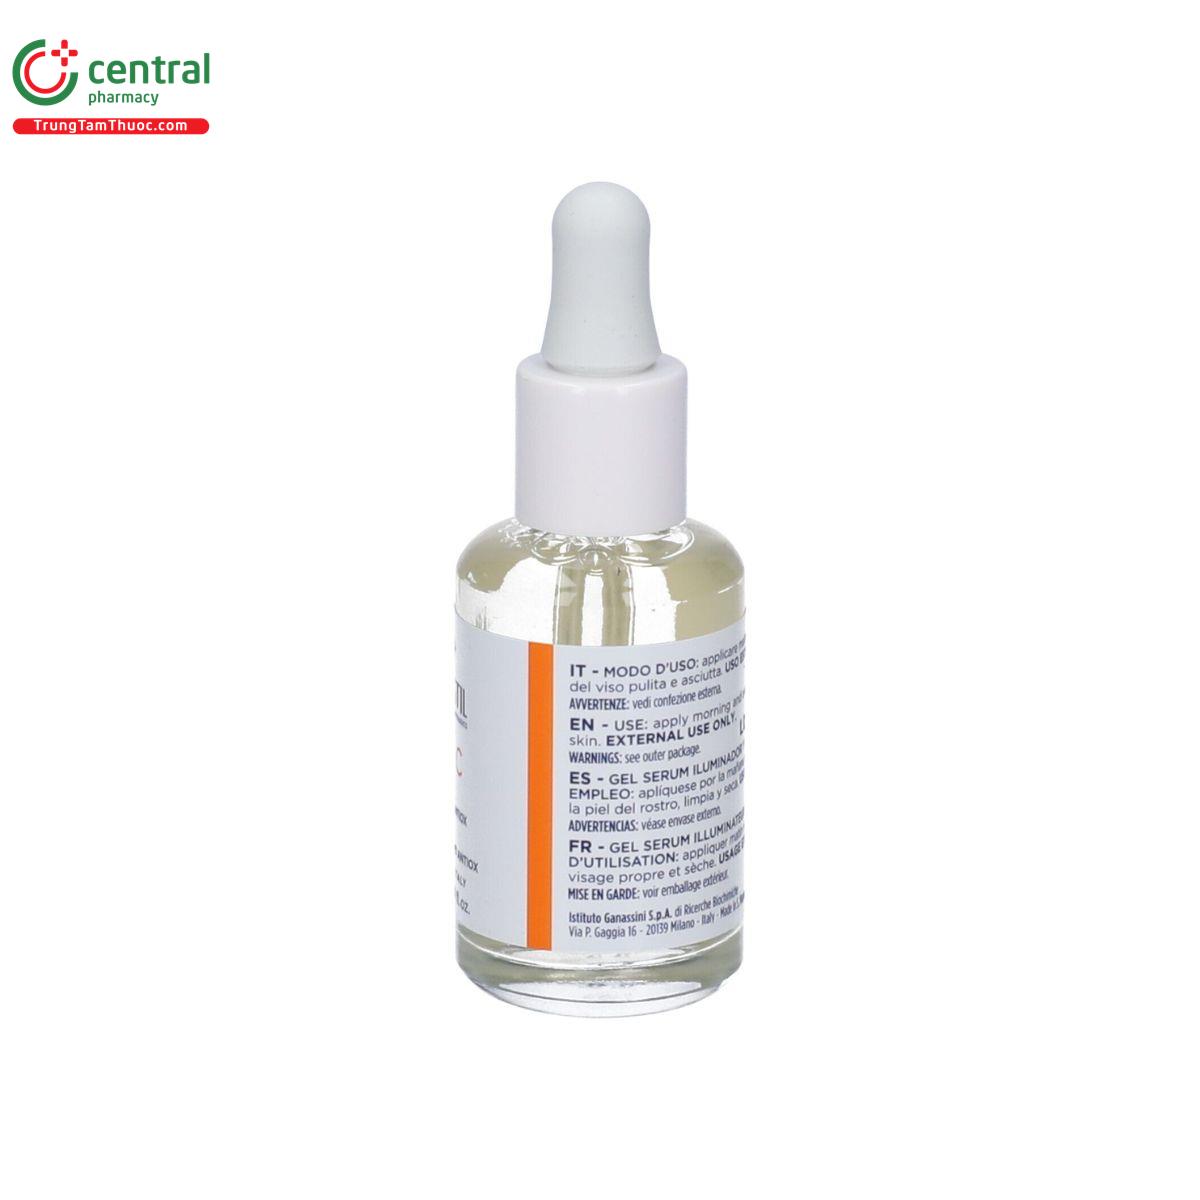 rilastil intense c gel serum illuminante e antiox 8 P6630